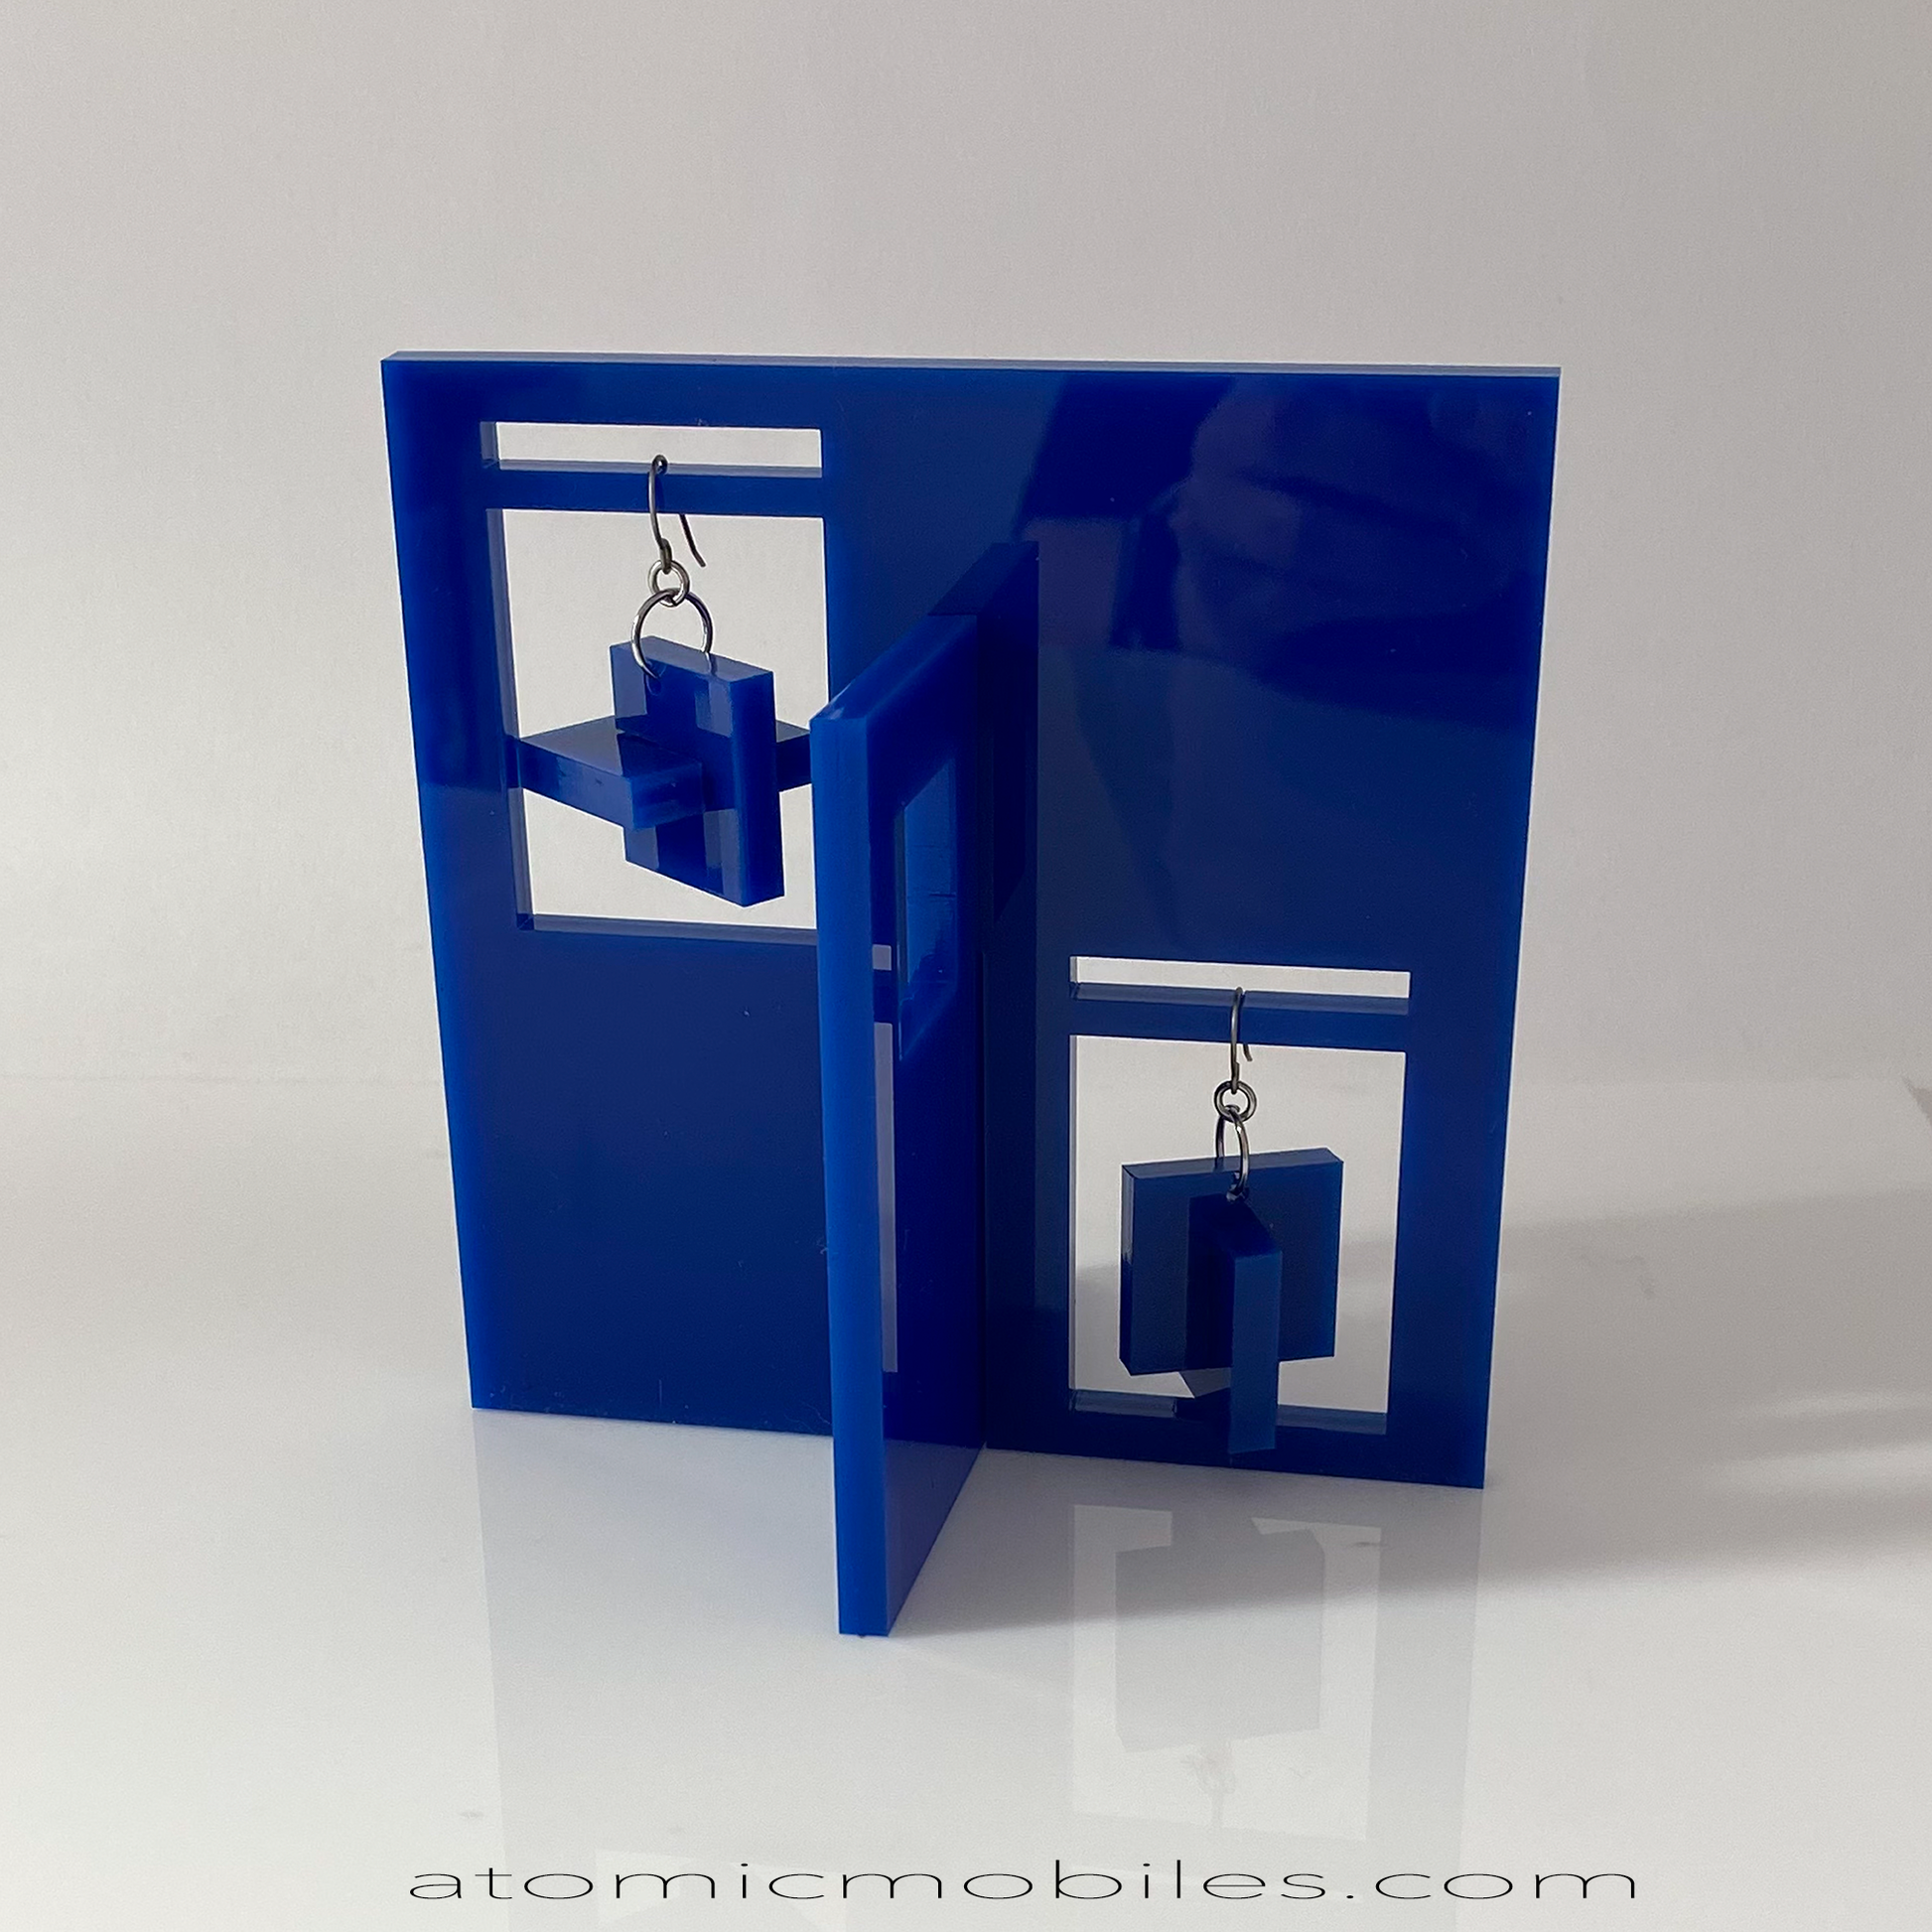 Yves Klein Inspired Moderne Earrings and Art Stabile Set in all blue - modern art sculpture stabile by AtomicMobiles.com